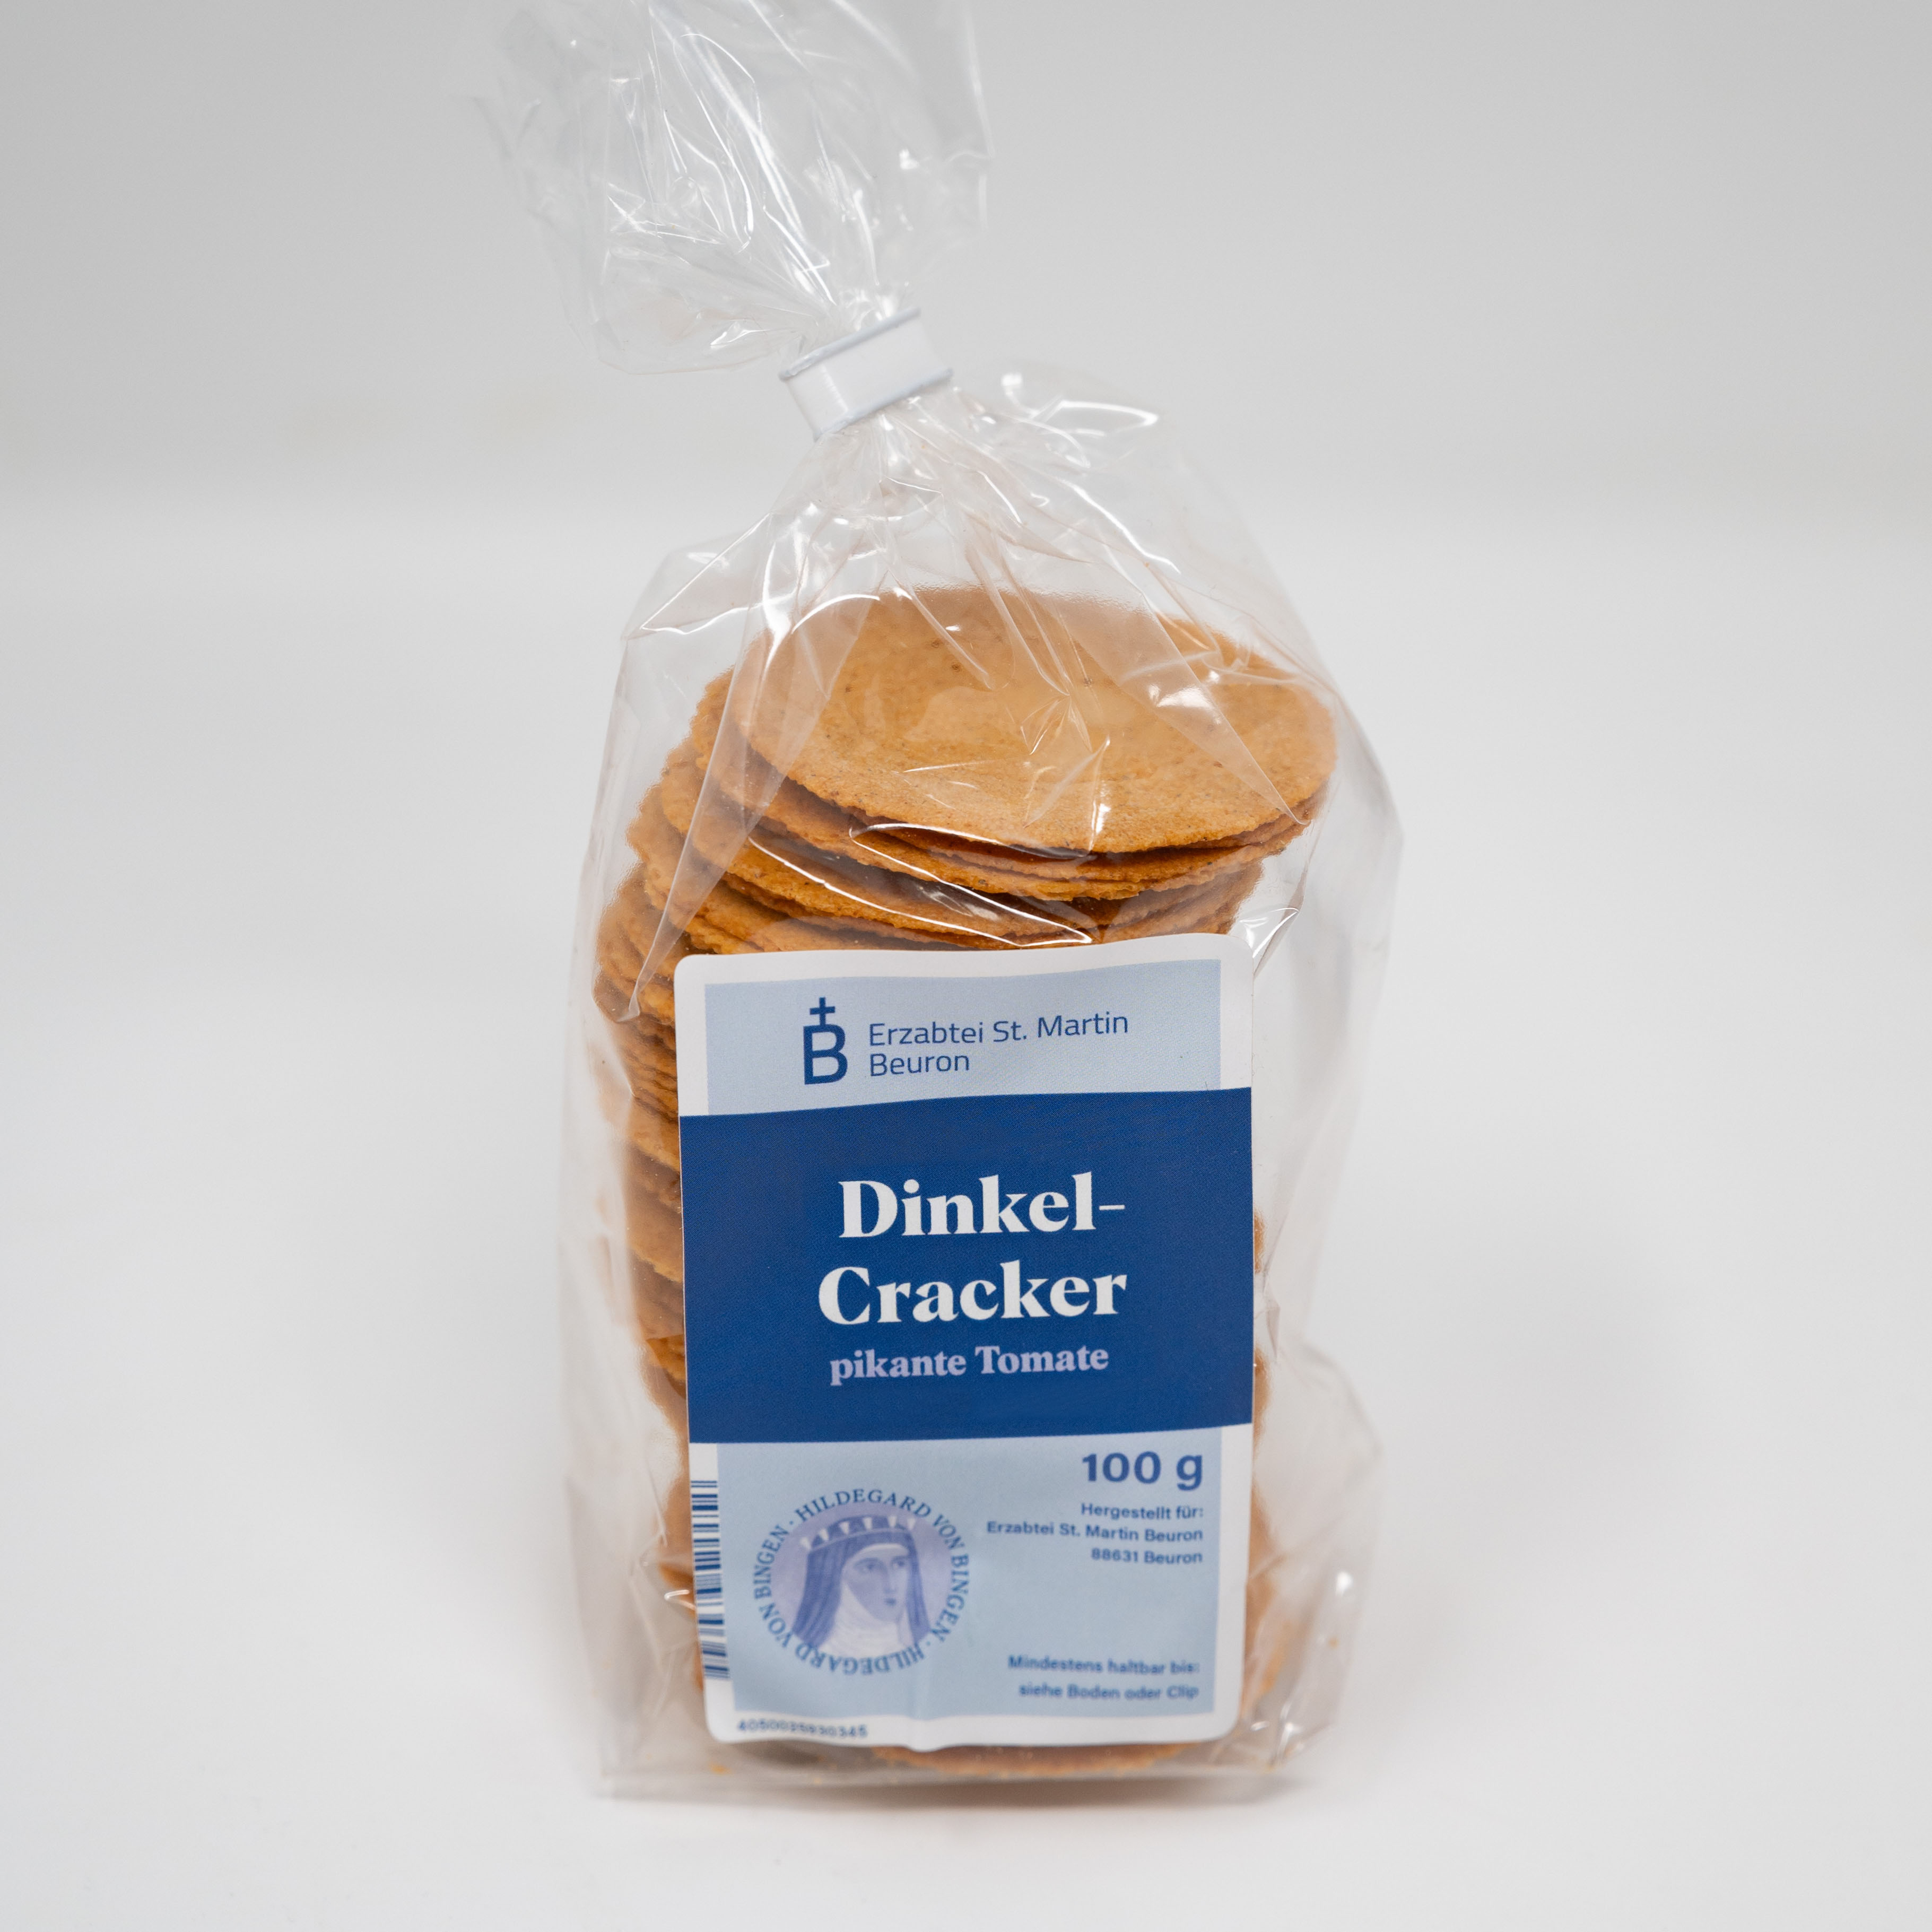 Dinkel-Cracker "pikante Tomate"